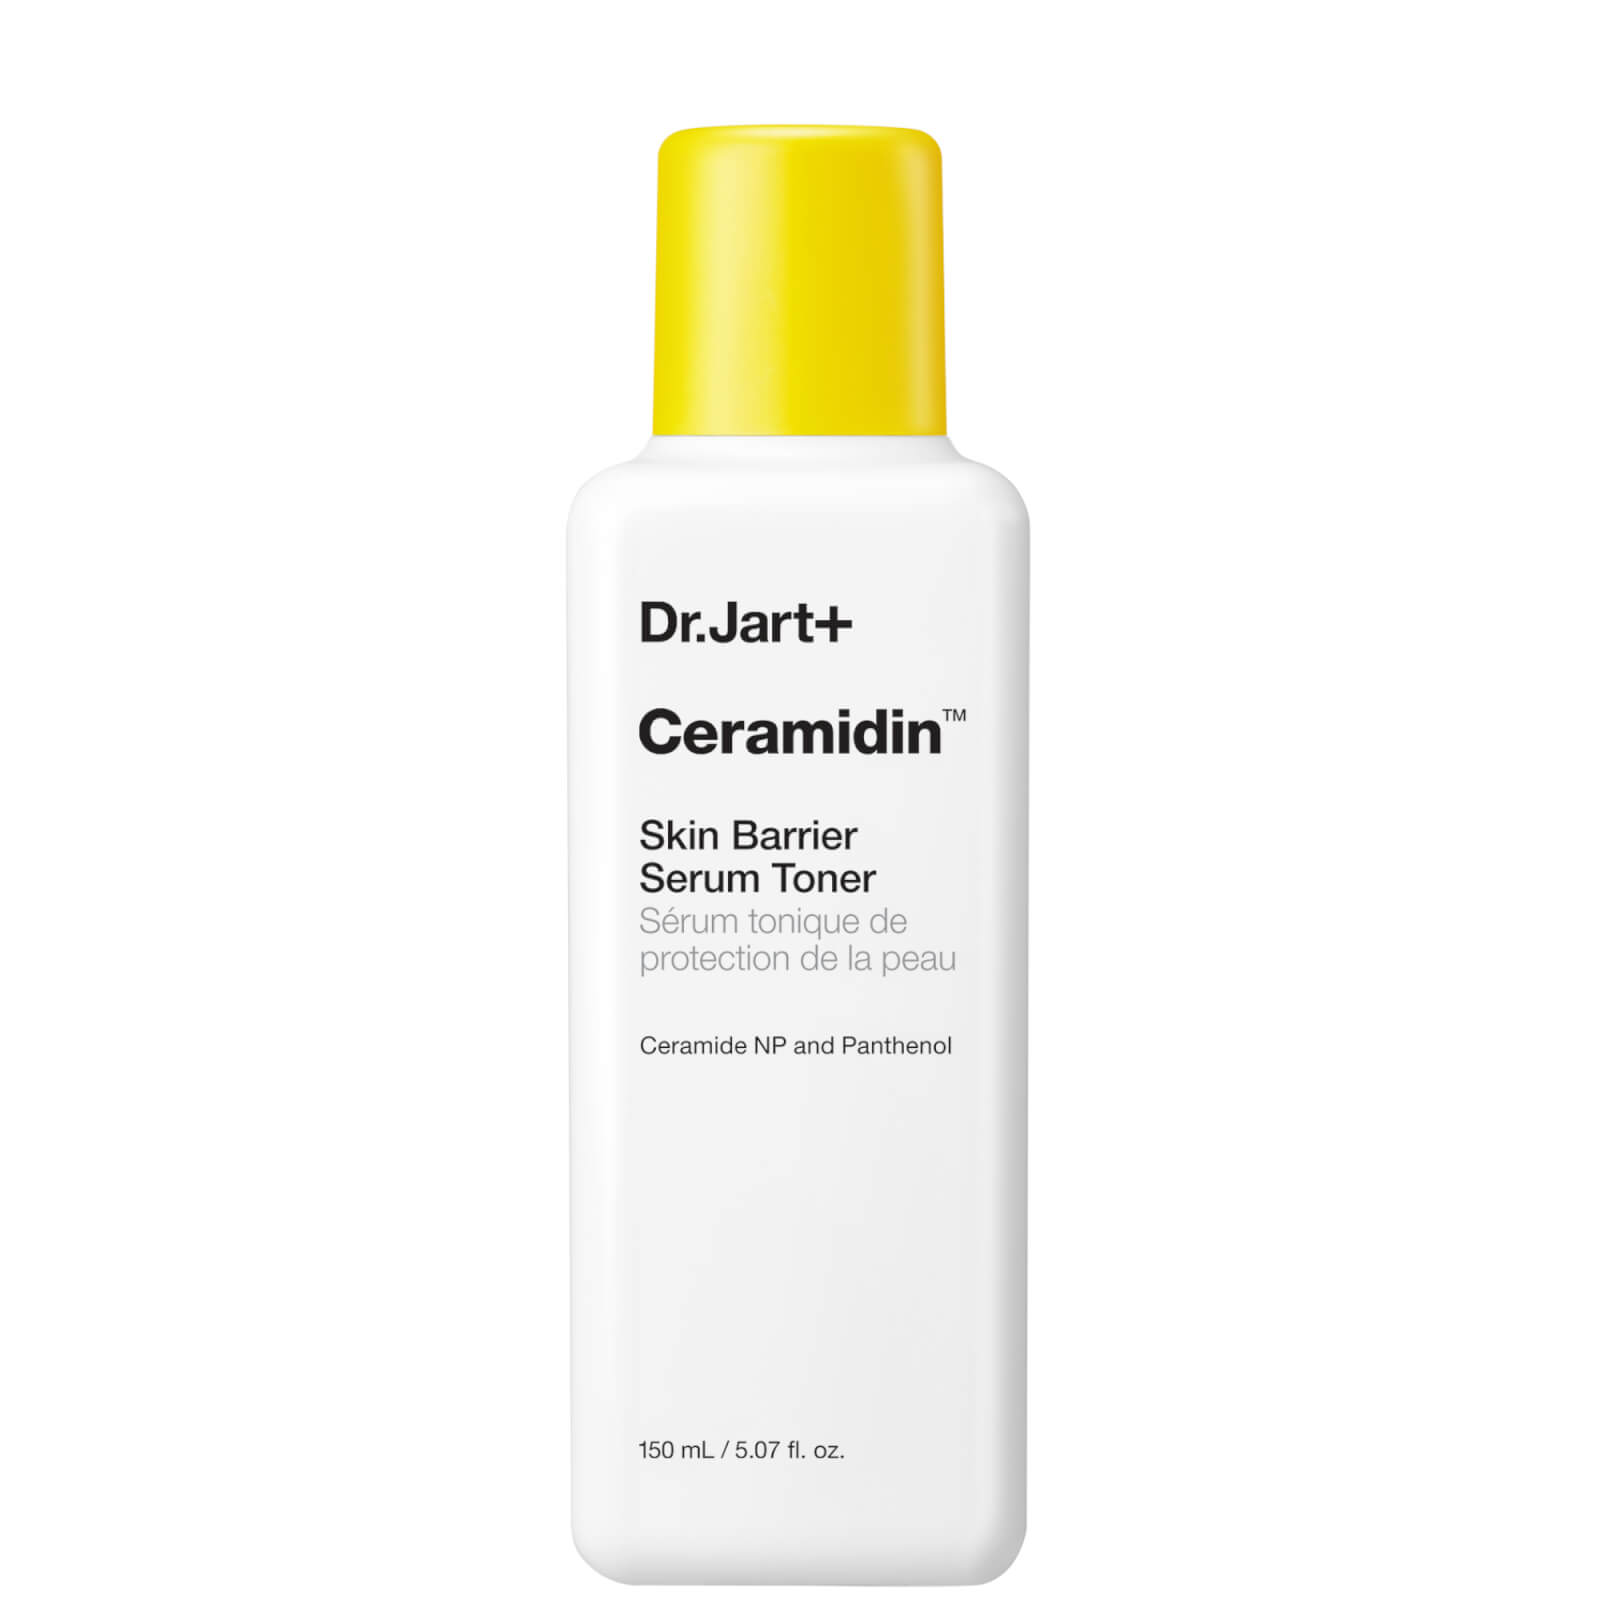 Image of Dr.Jart+ Ceramidin Skin Barrier Serum Toner 150ml